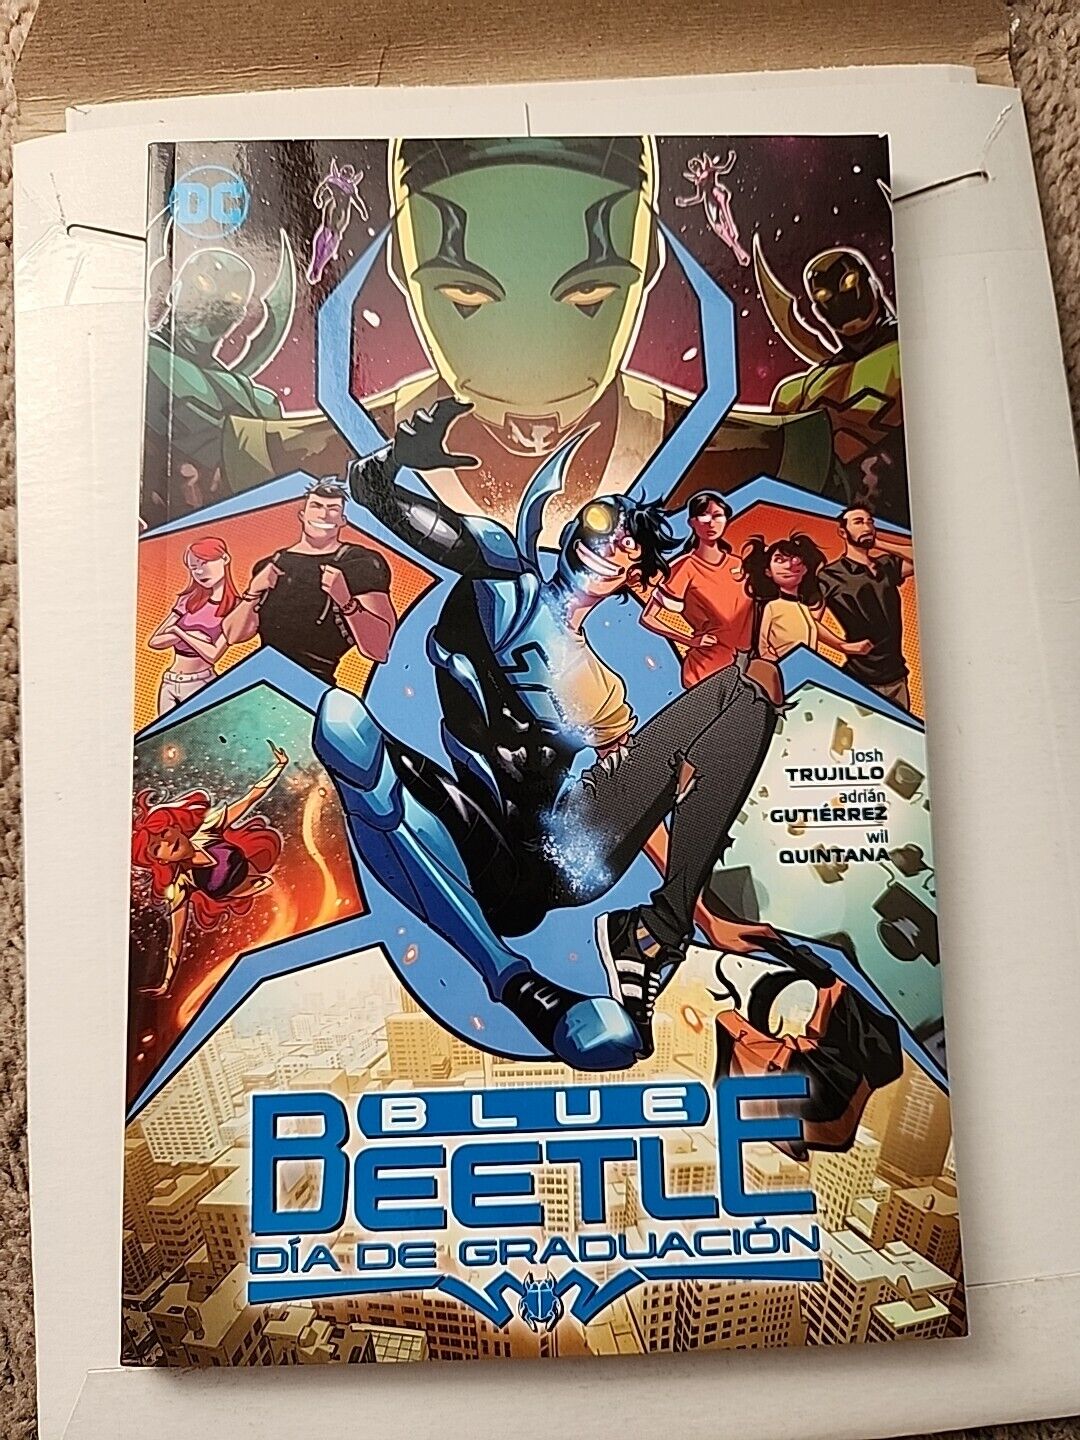 Blue Beetle Dia de Graduacion TP SPANISH LANGUAGE Edition VGC